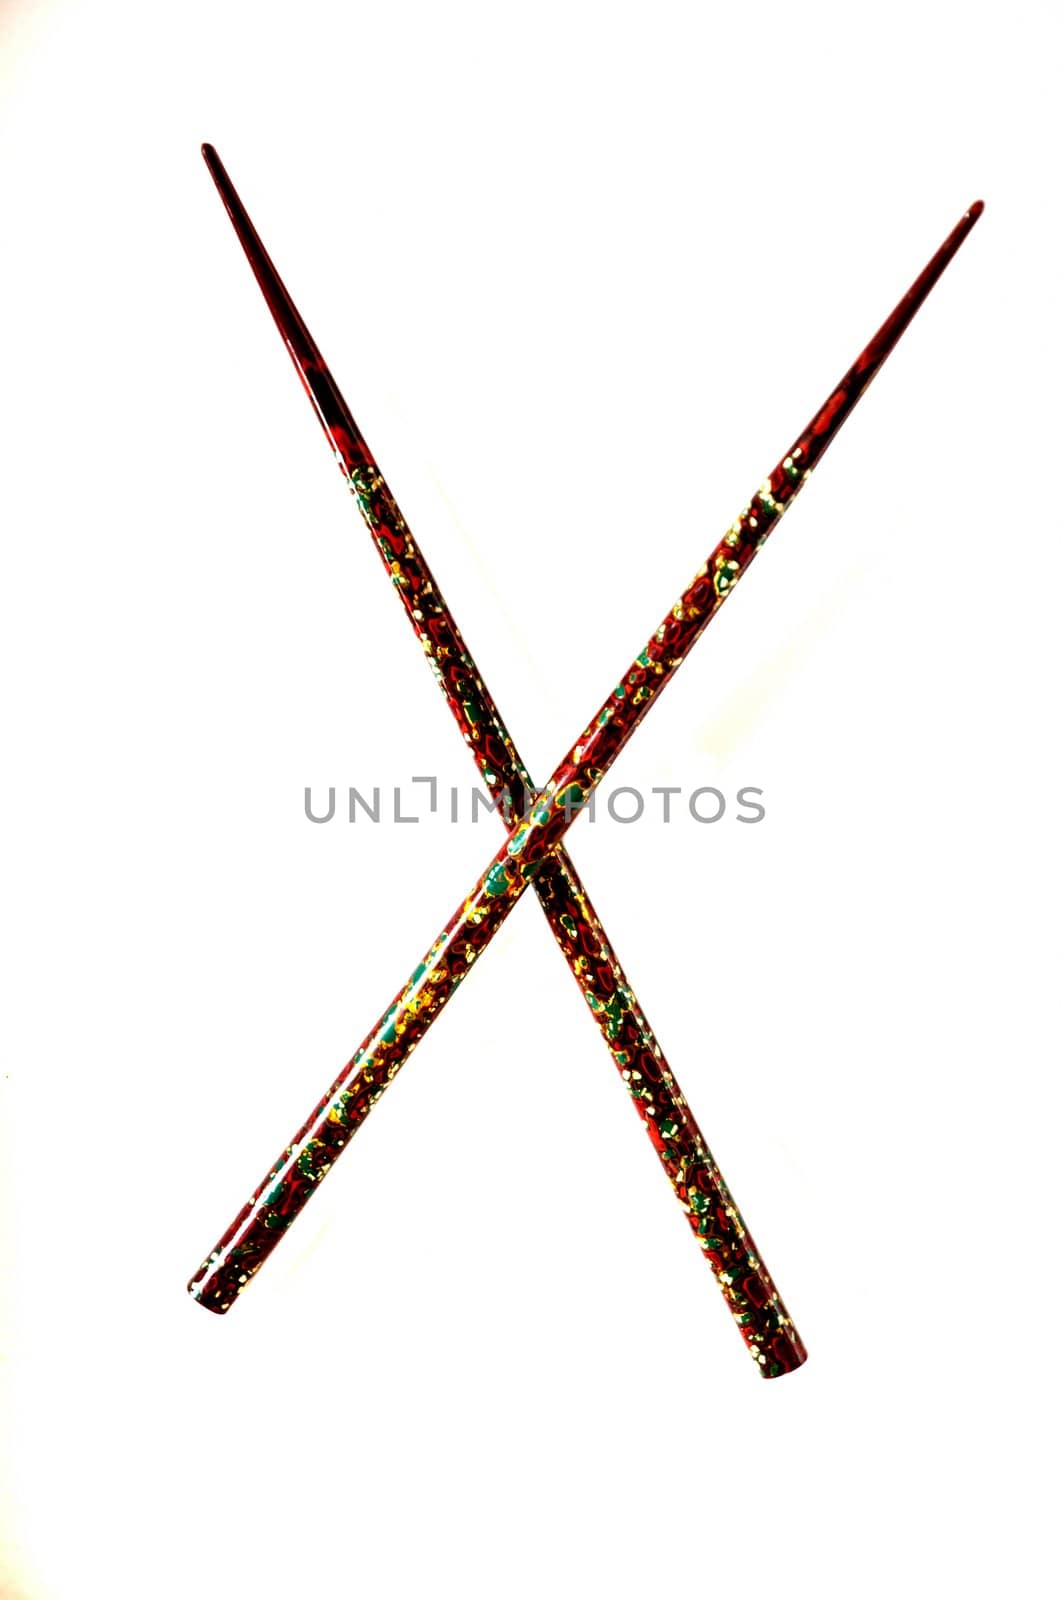 chinese beautiful chopsticks isolatad on a white background